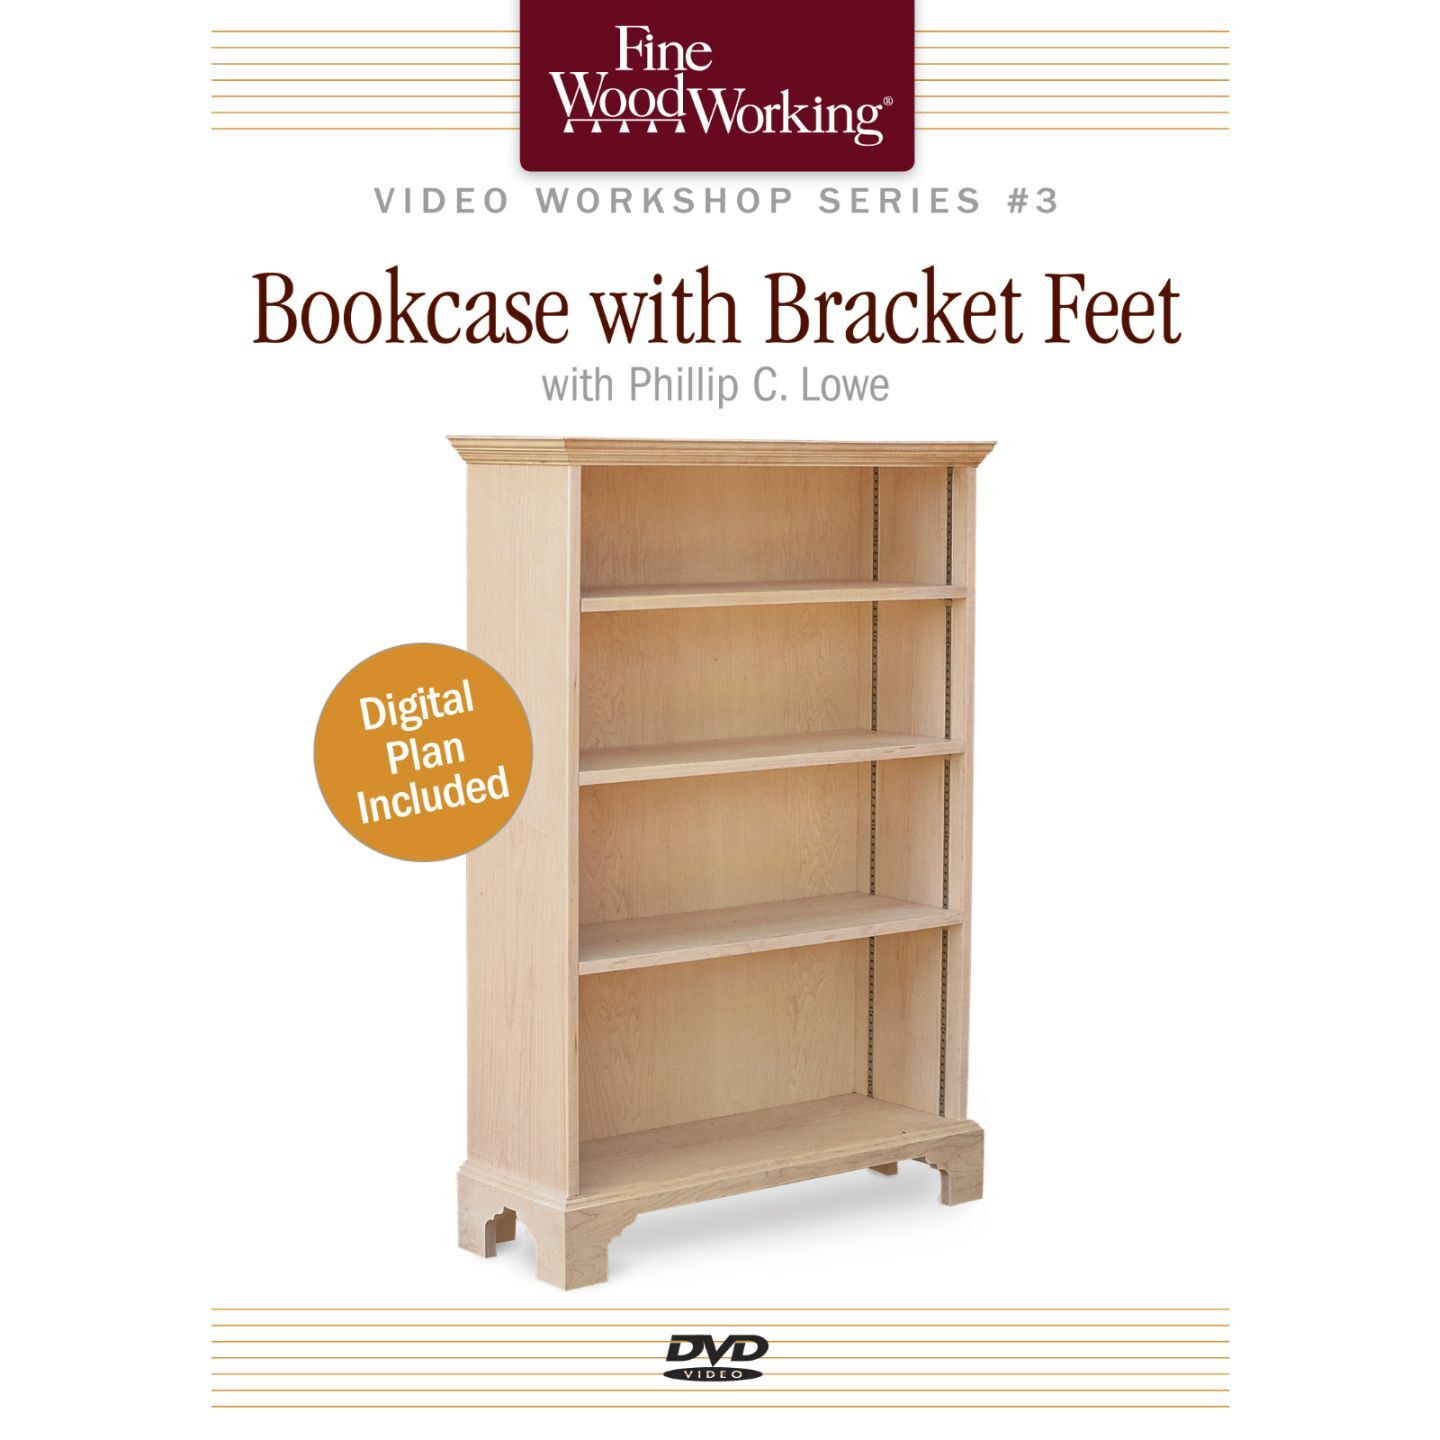 Bookcase with Bracket Feet - DVD